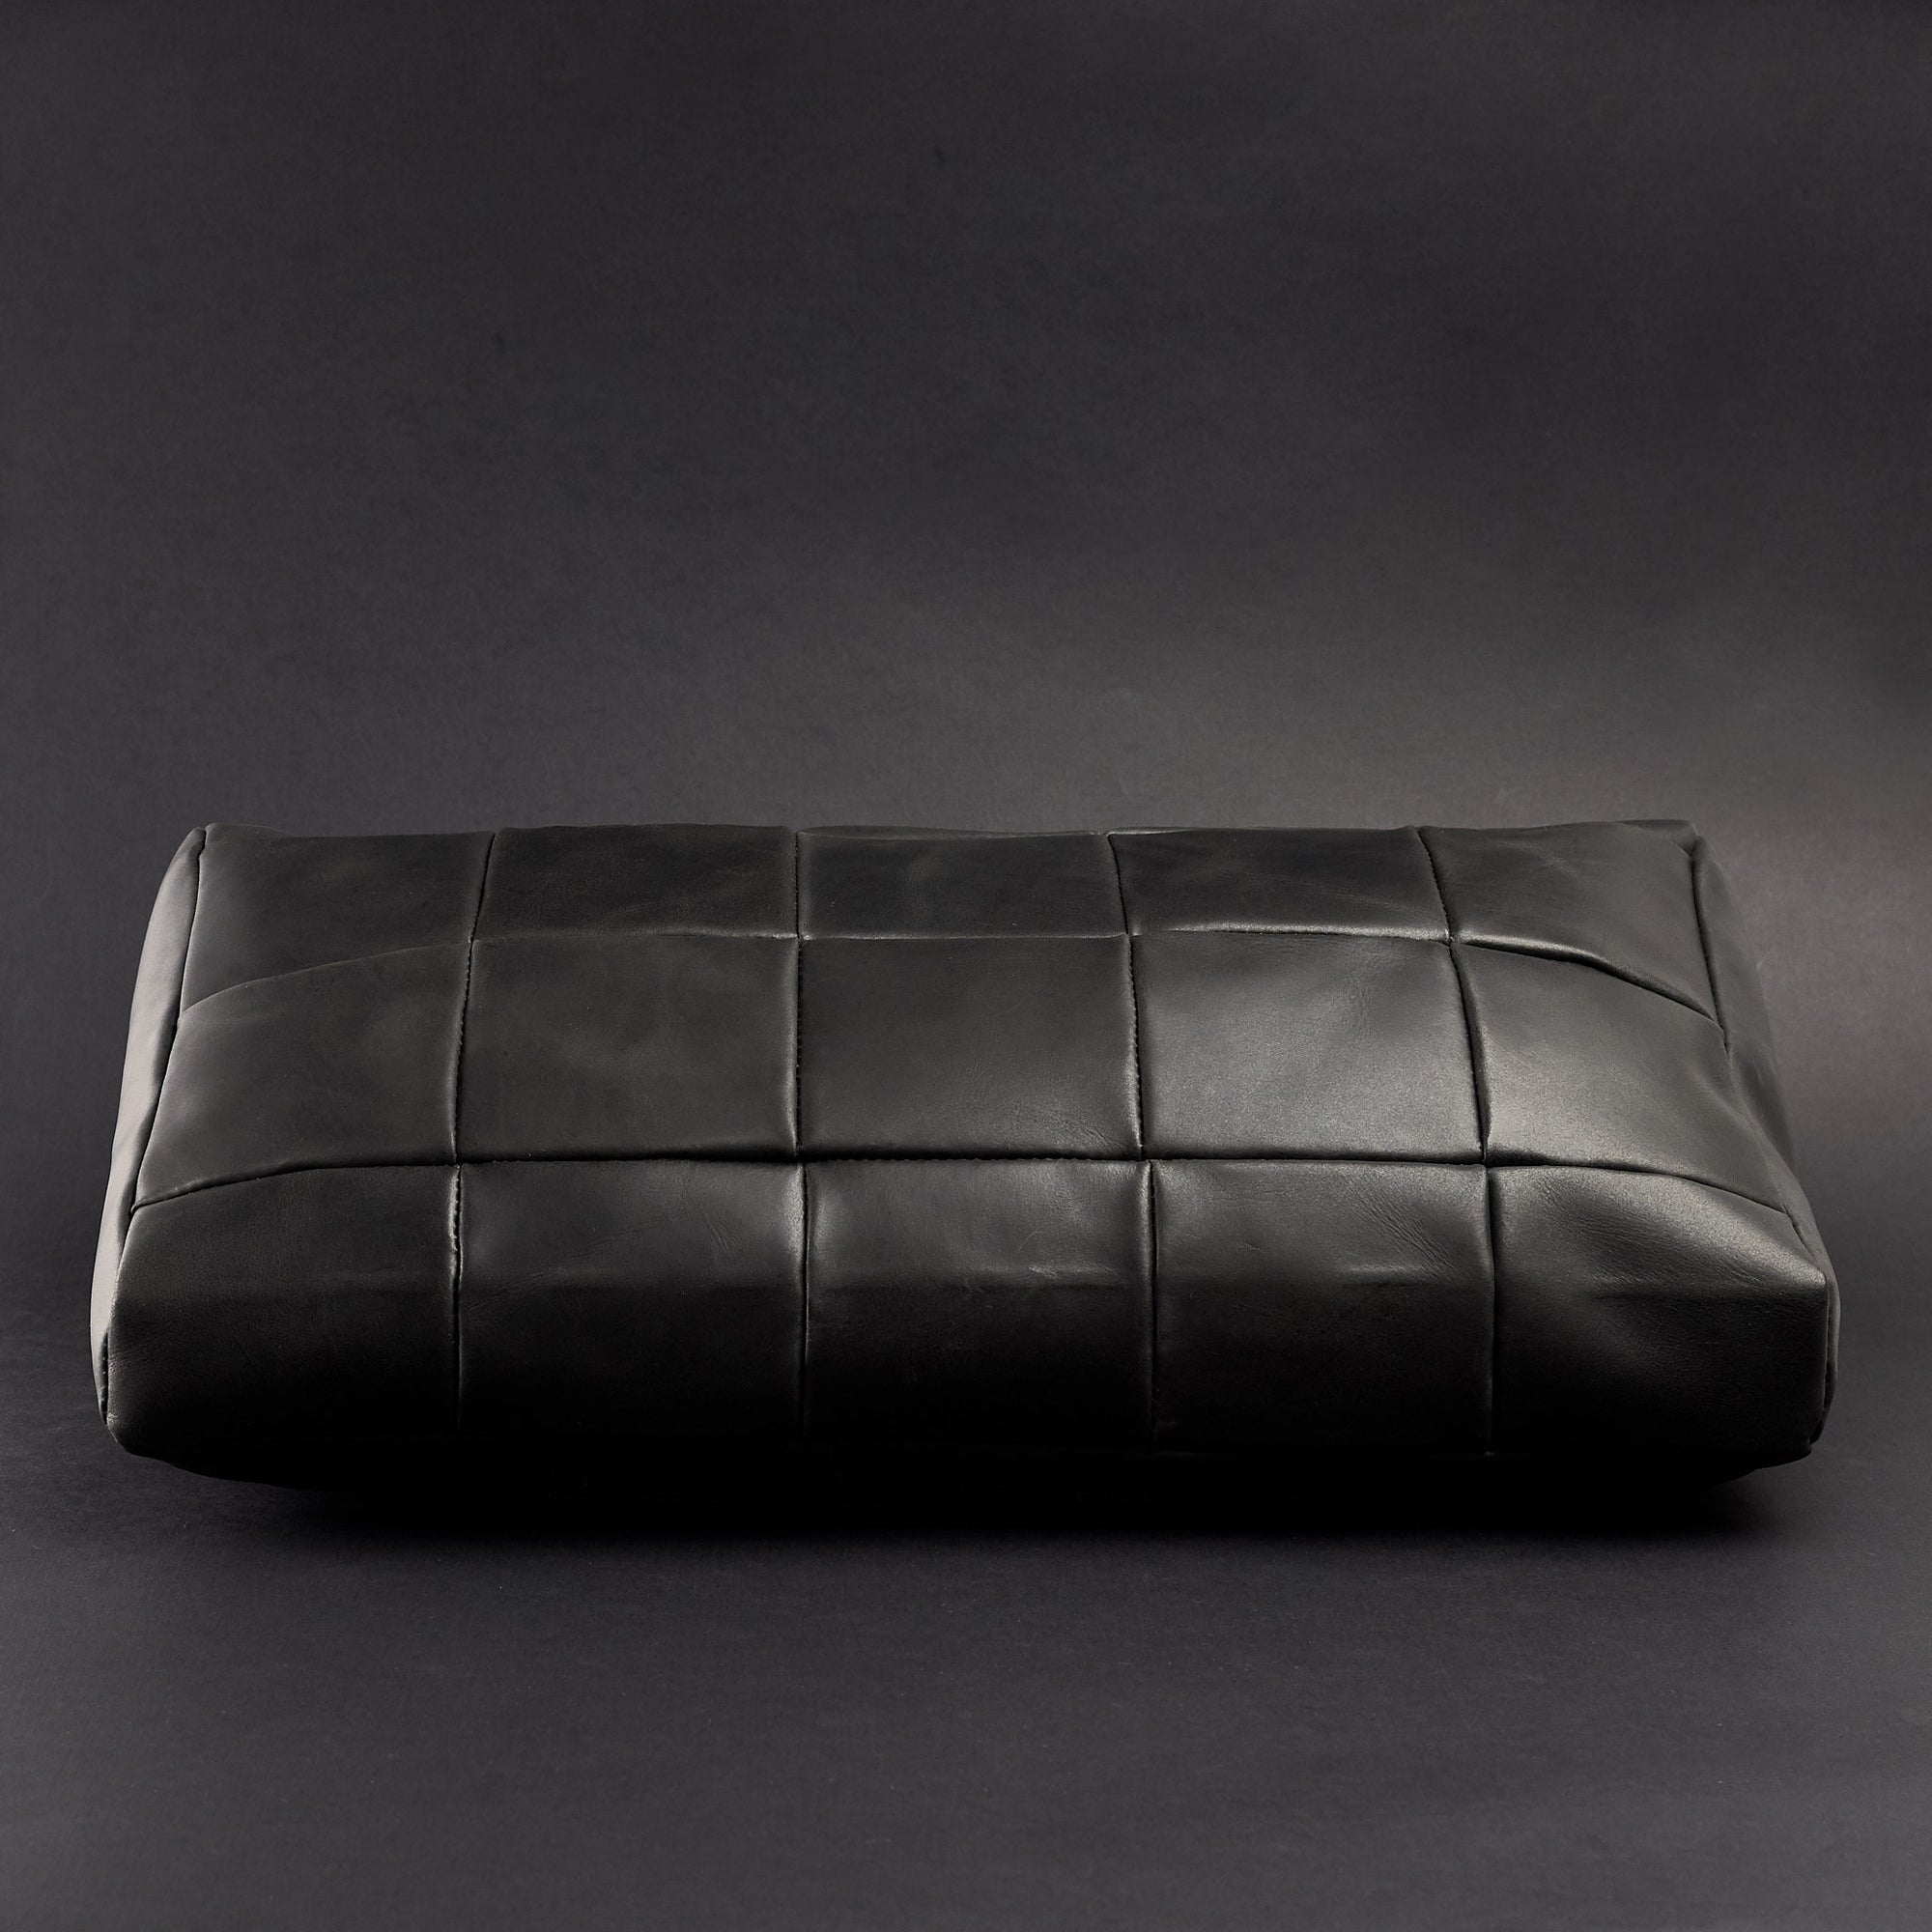 Front. Ergonomic under desk footrest cover in black by Capra Leather